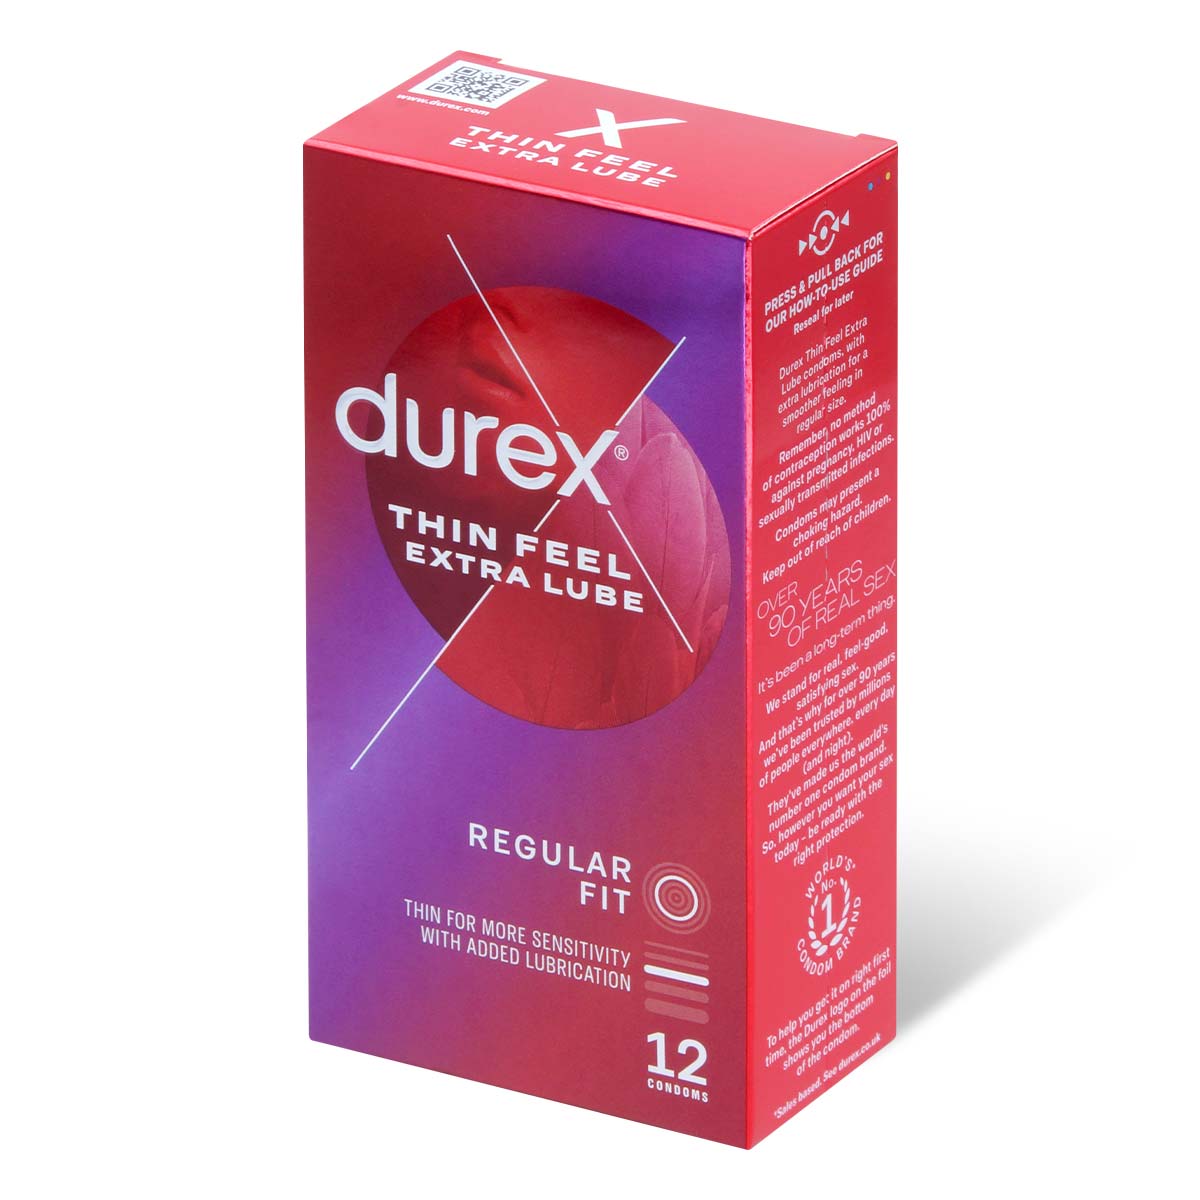 Durex Thin Feel Extra Lube Regular Fit 12's Pack Latex Condom-p_1